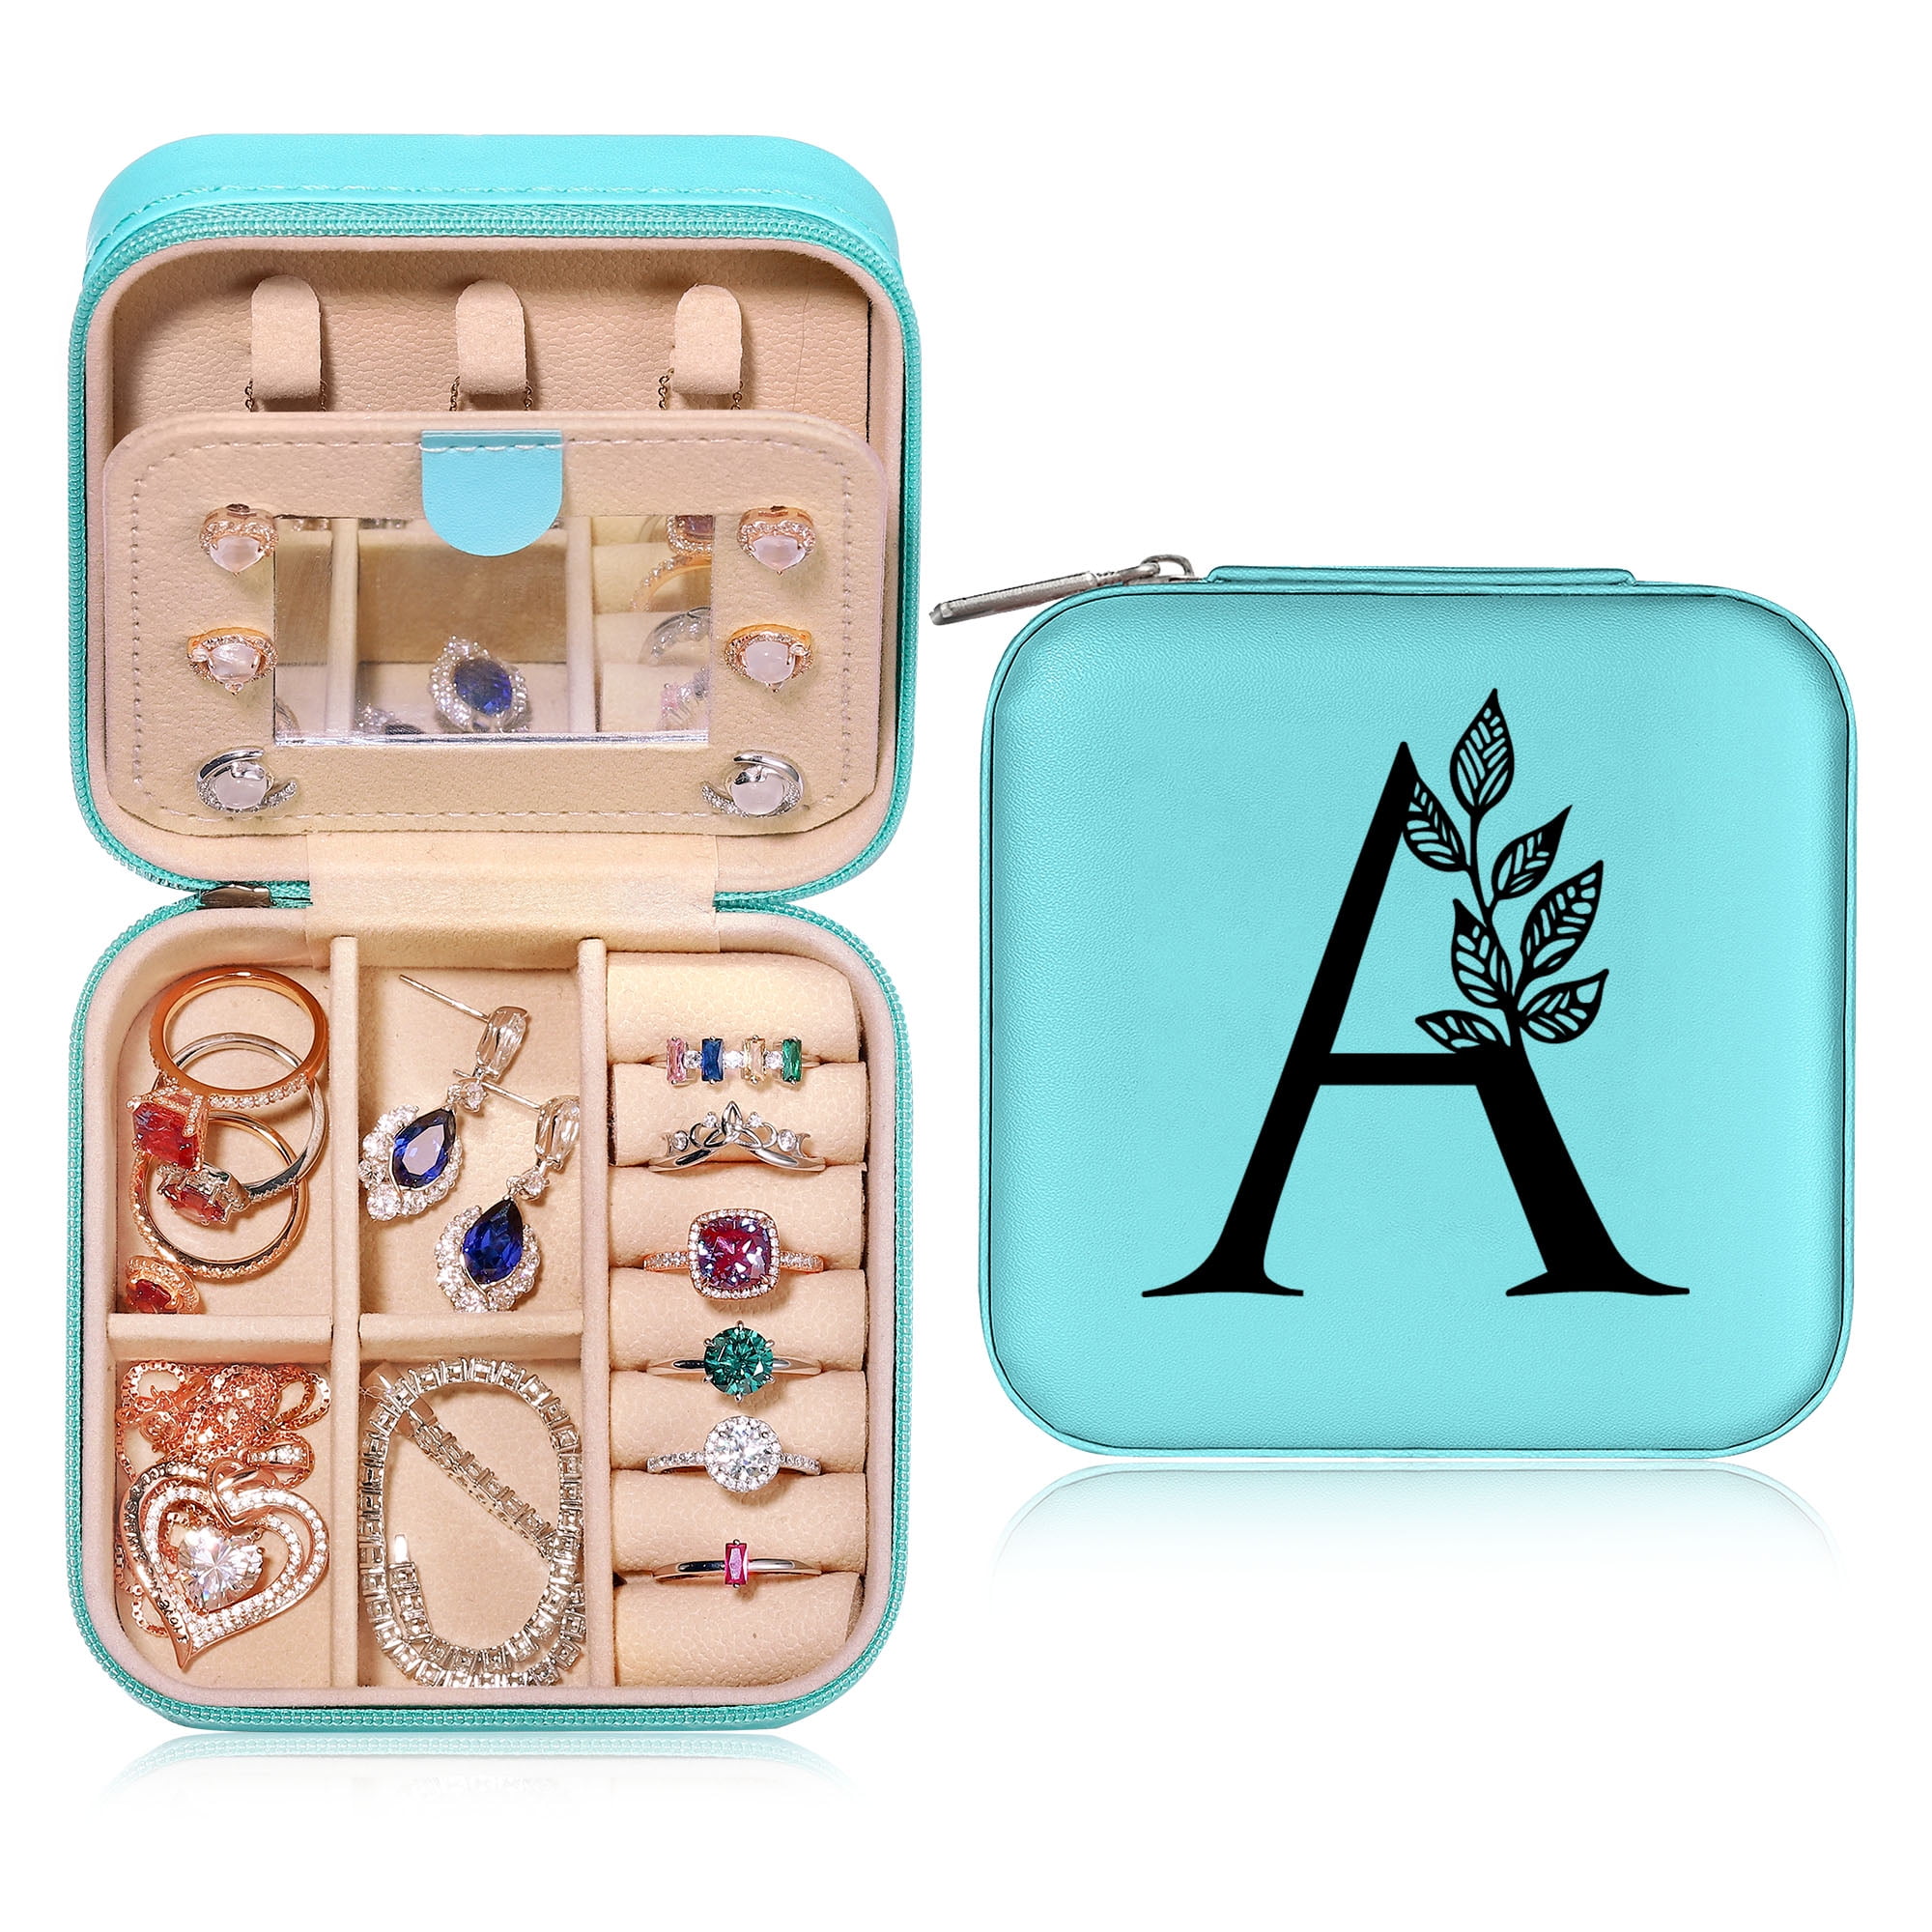 TINGN Travel Jewelry Case Jewelry Organizer Jewelry Box Travel Essentials  Travel Accessories for Girls, Teen Girls Gifts for Teenage Girls Birthday  Preppy Stuff 